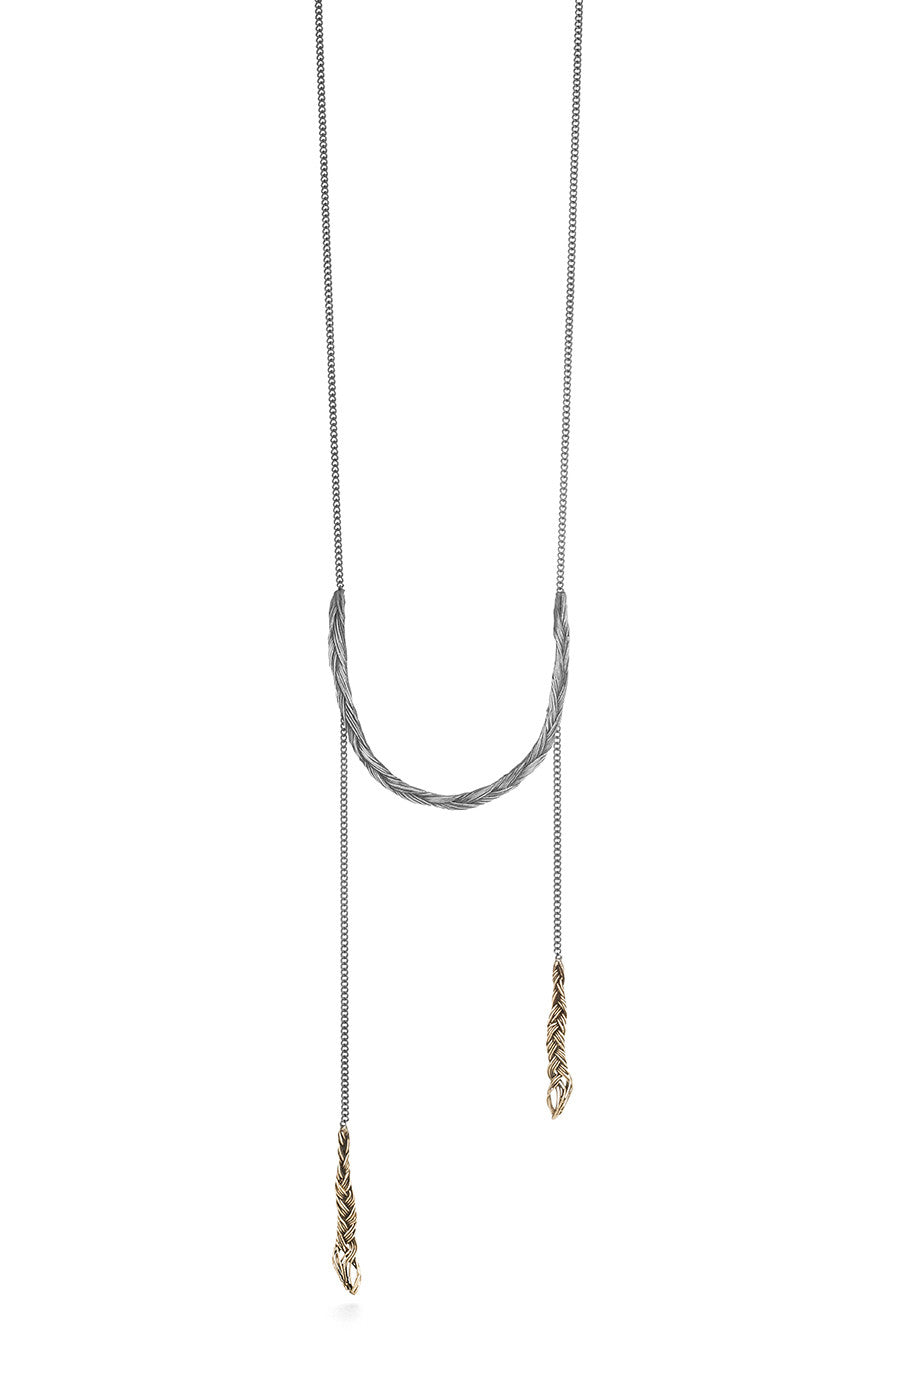 Braid Necklace - U-shaped silver braid on long chain